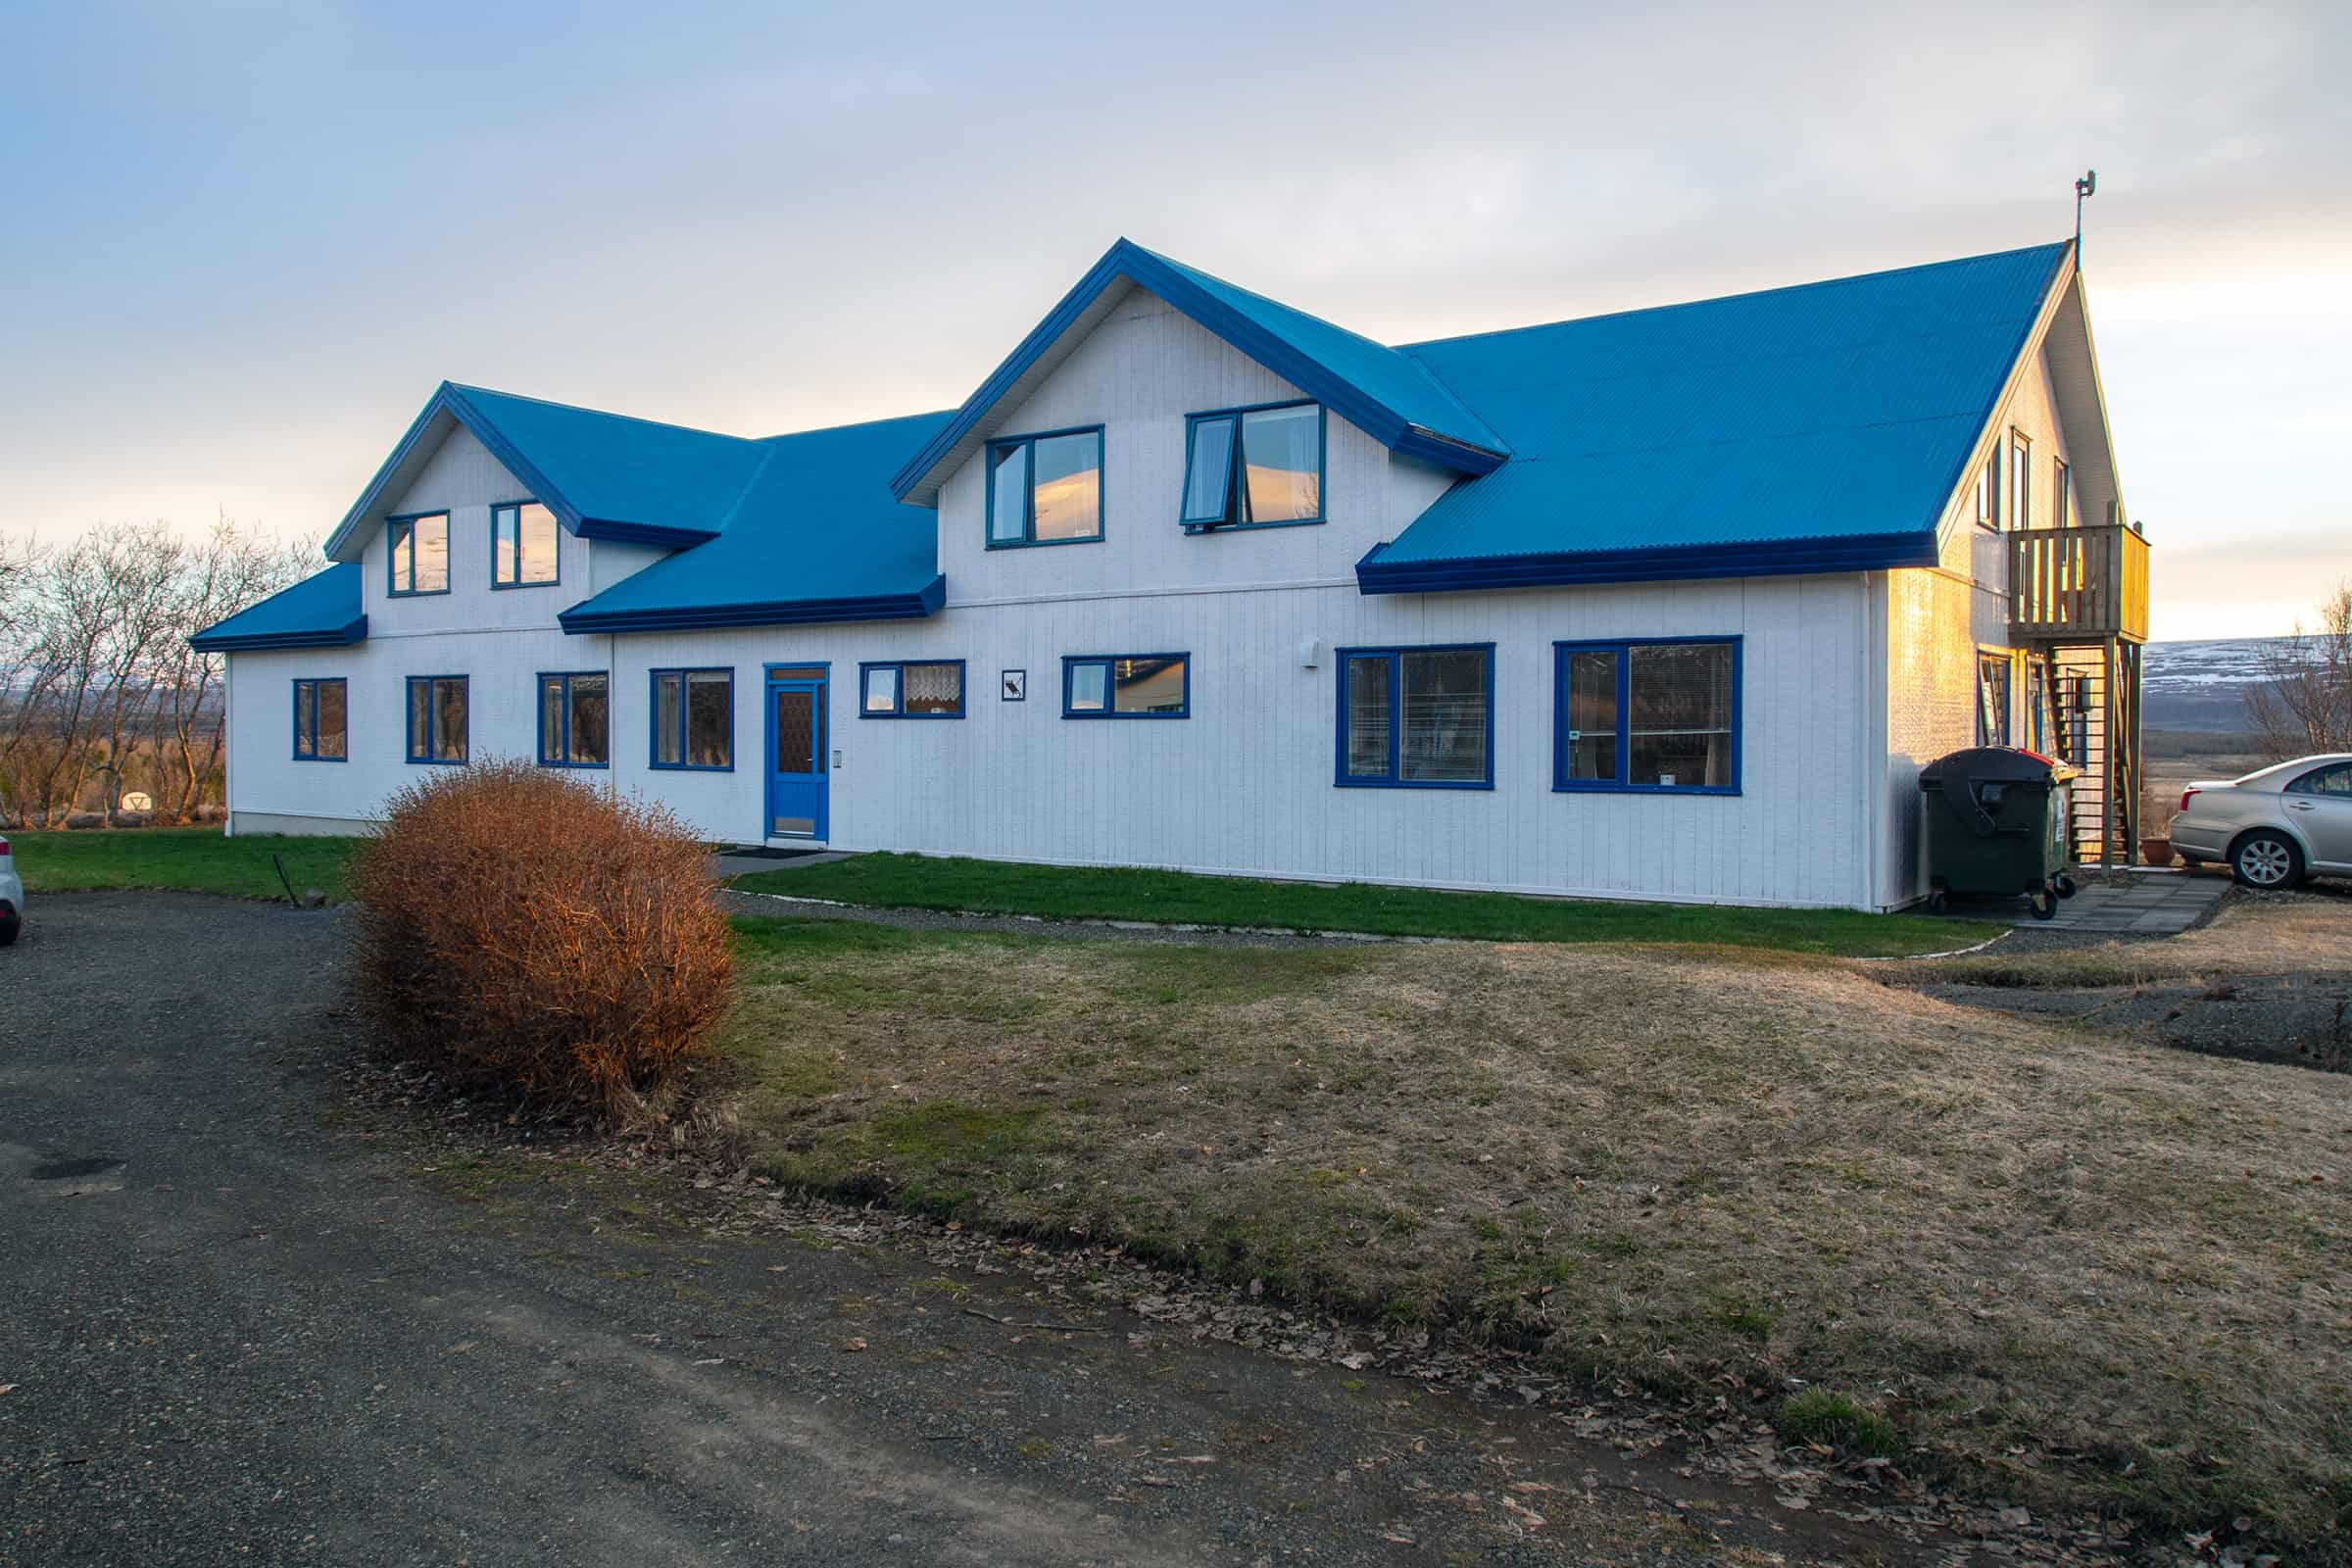 Eyjolfsstadir guesthouse